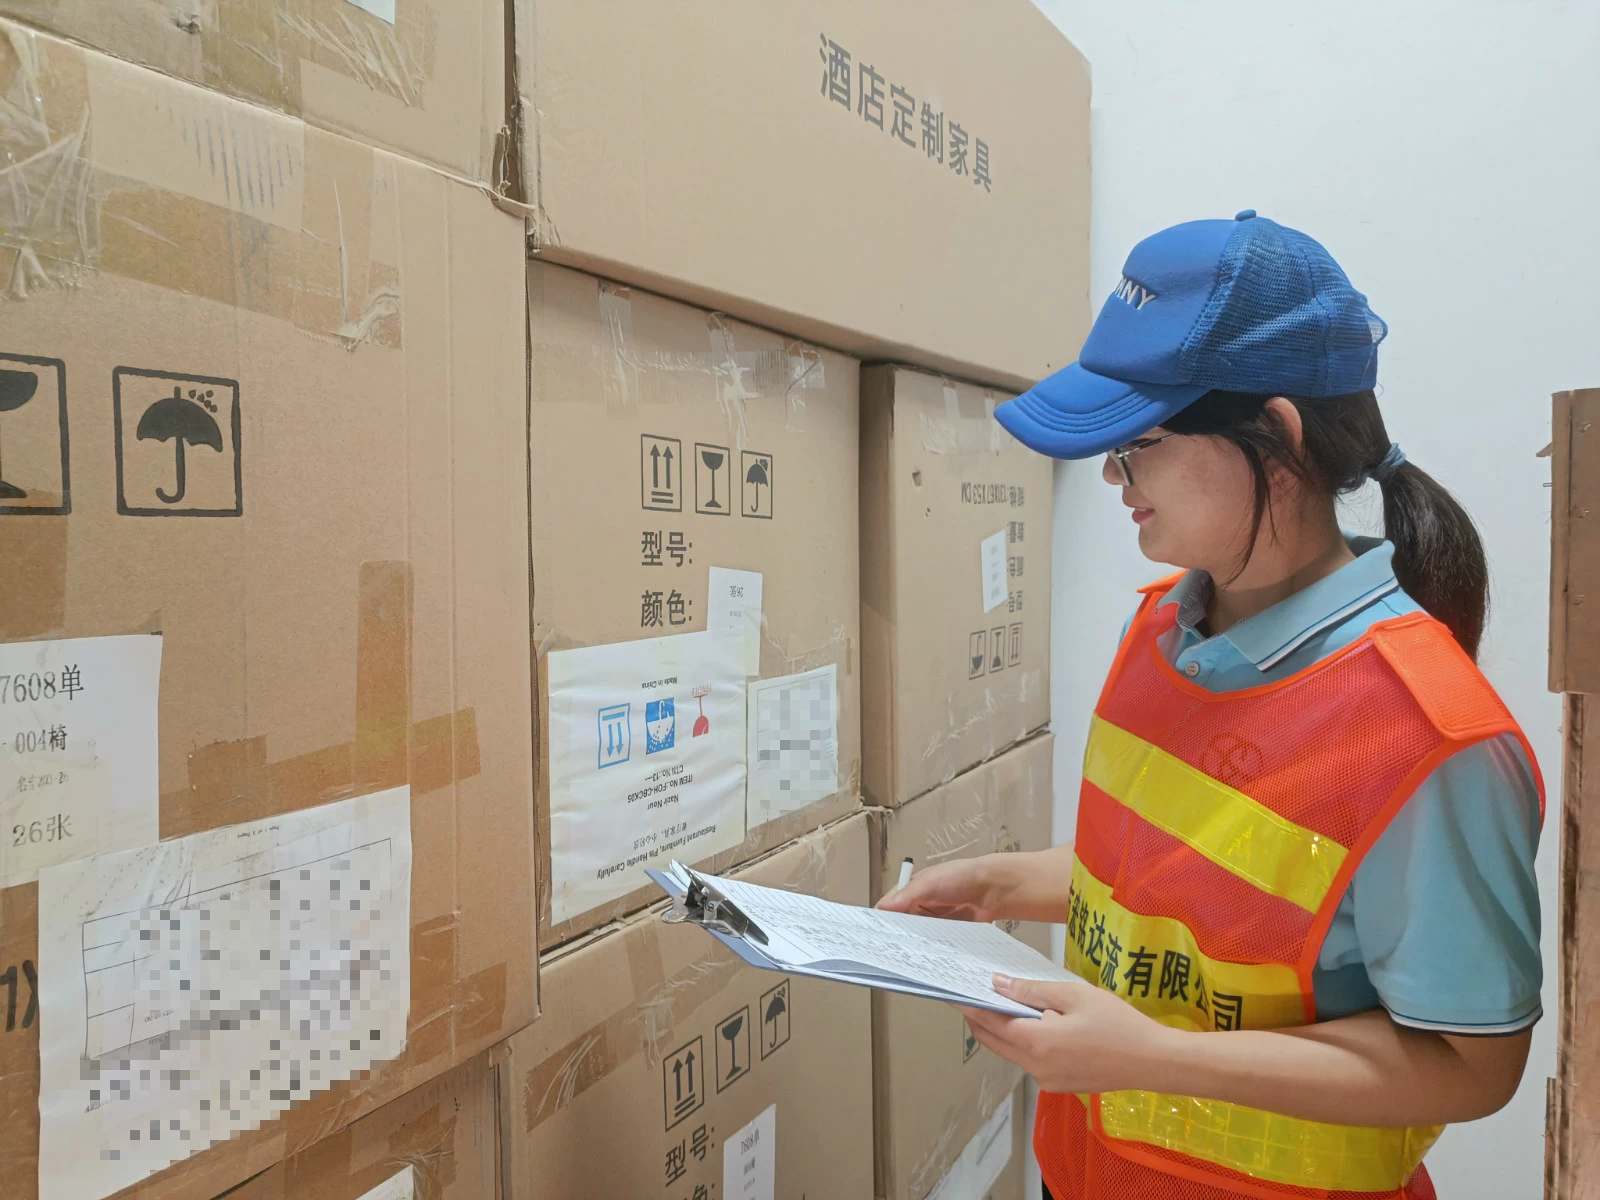 DDP sea freight service China to warehouse in Manila Davao Cebu, Sunny Worldwide Logistics